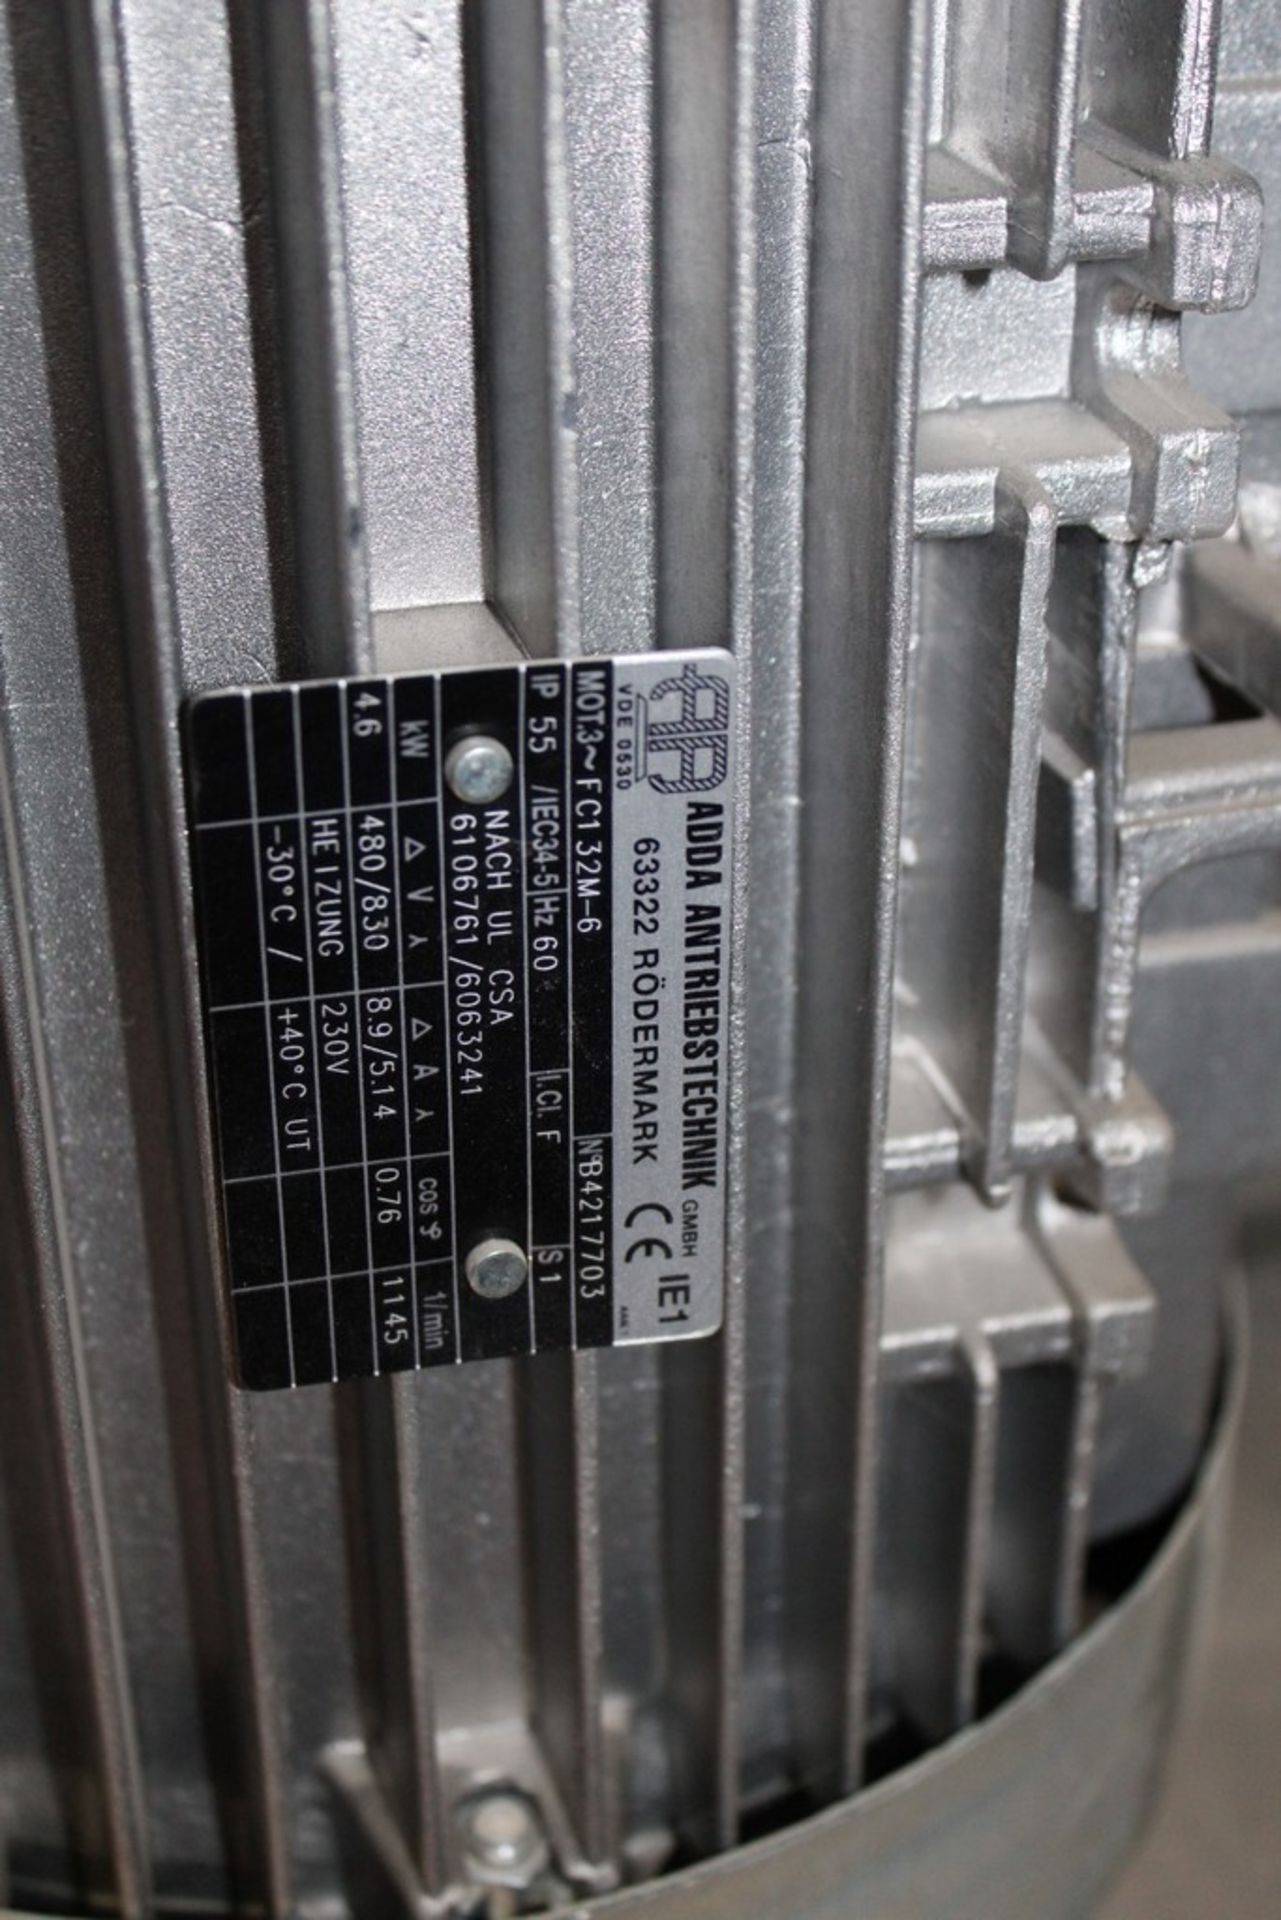 (3) ADDA ANTRIEBSTECHNIK MODEL FC132M-6 ELECTRIC MOTORS, 4.6 KW, 1145 RPM - Image 2 of 2